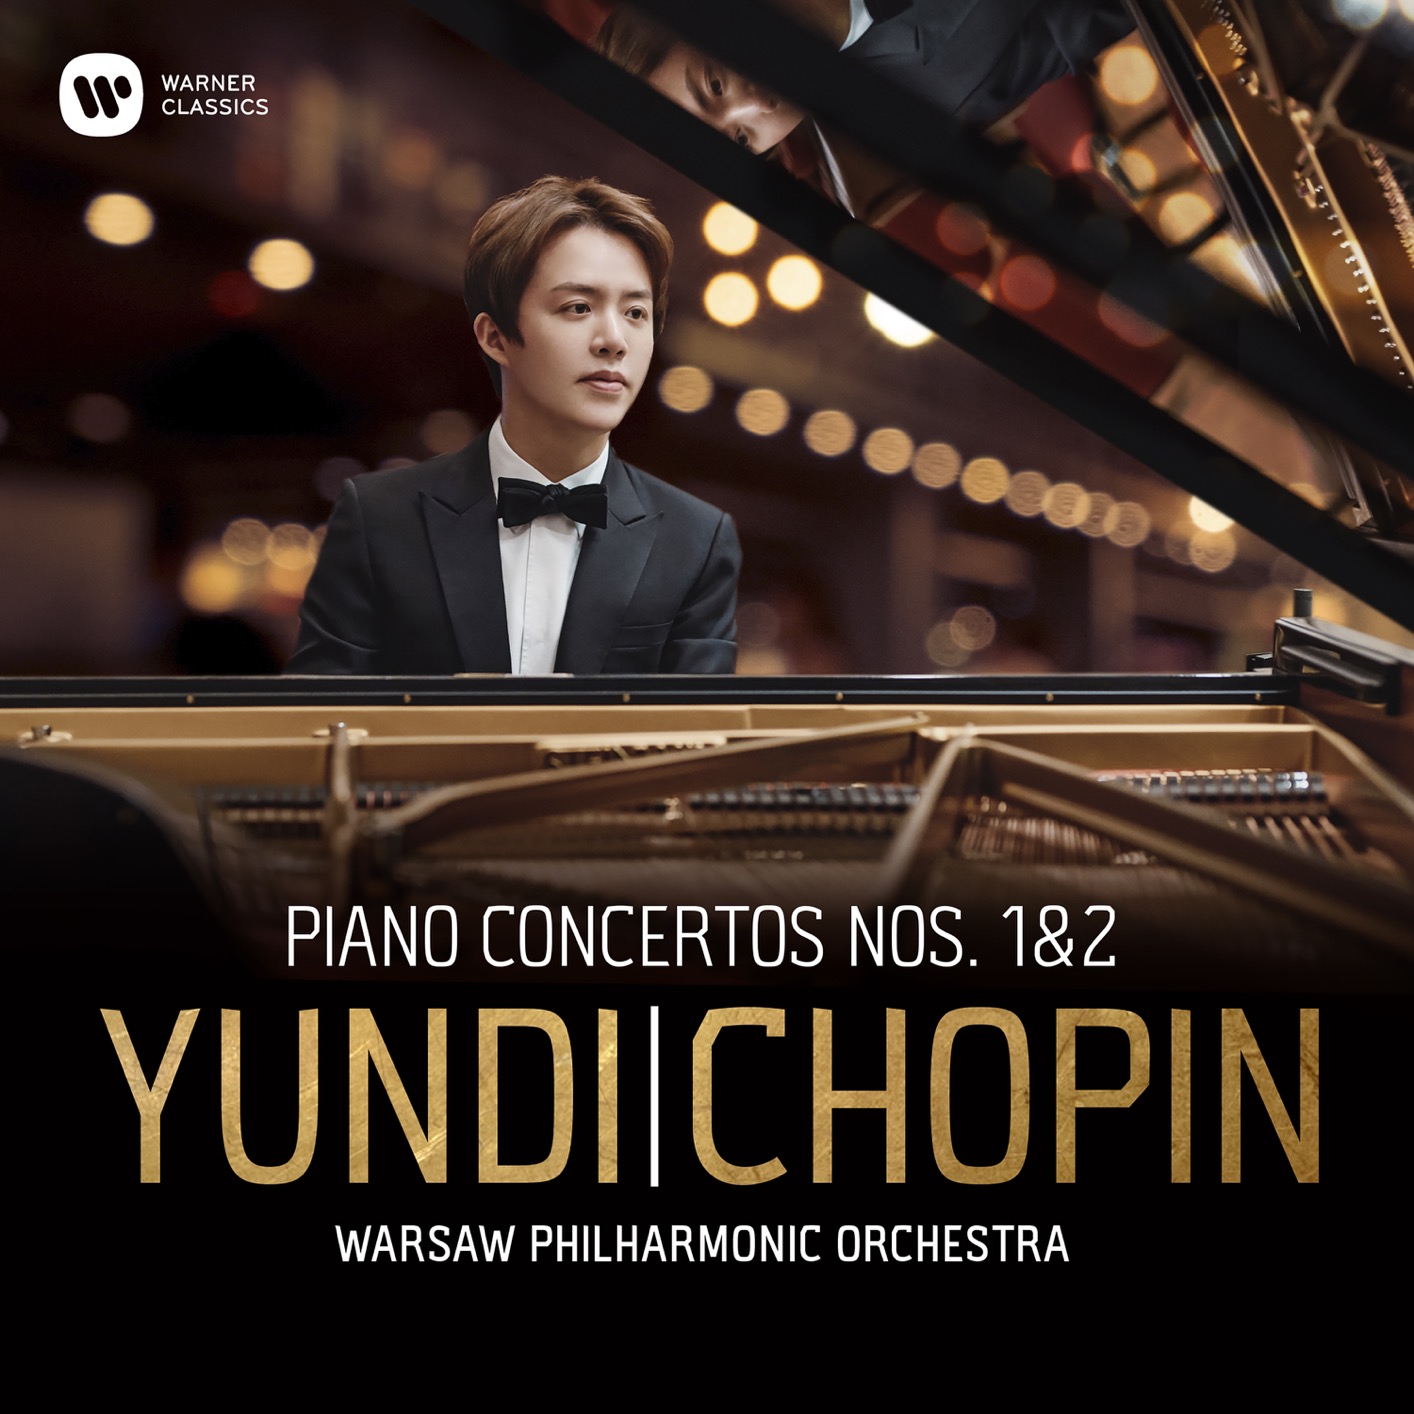 YUNDI - Chopin: Piano Concertos Nos 1 & 2 (2020) [FLAC 24bit/96kHz]